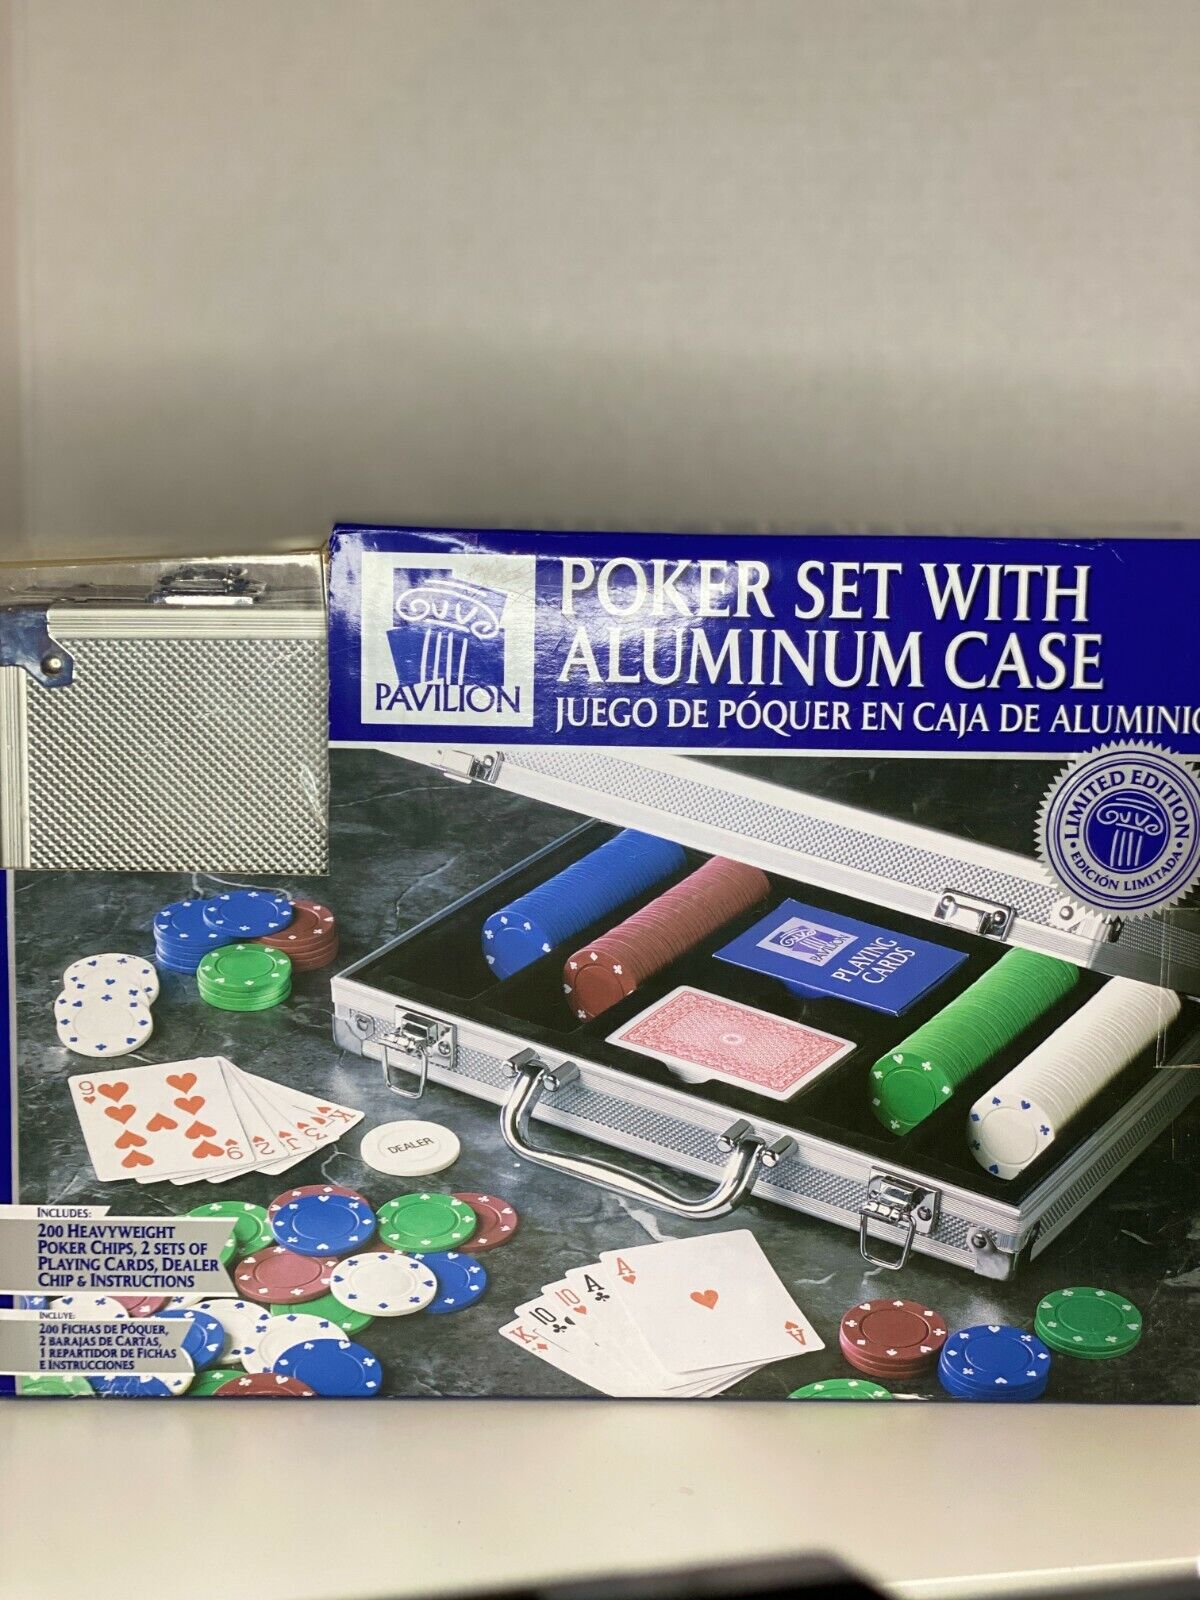 Poker Da Vinci 200 Dice Striped 11.5 Gram Chip Set With Aluminum Case Dealer But